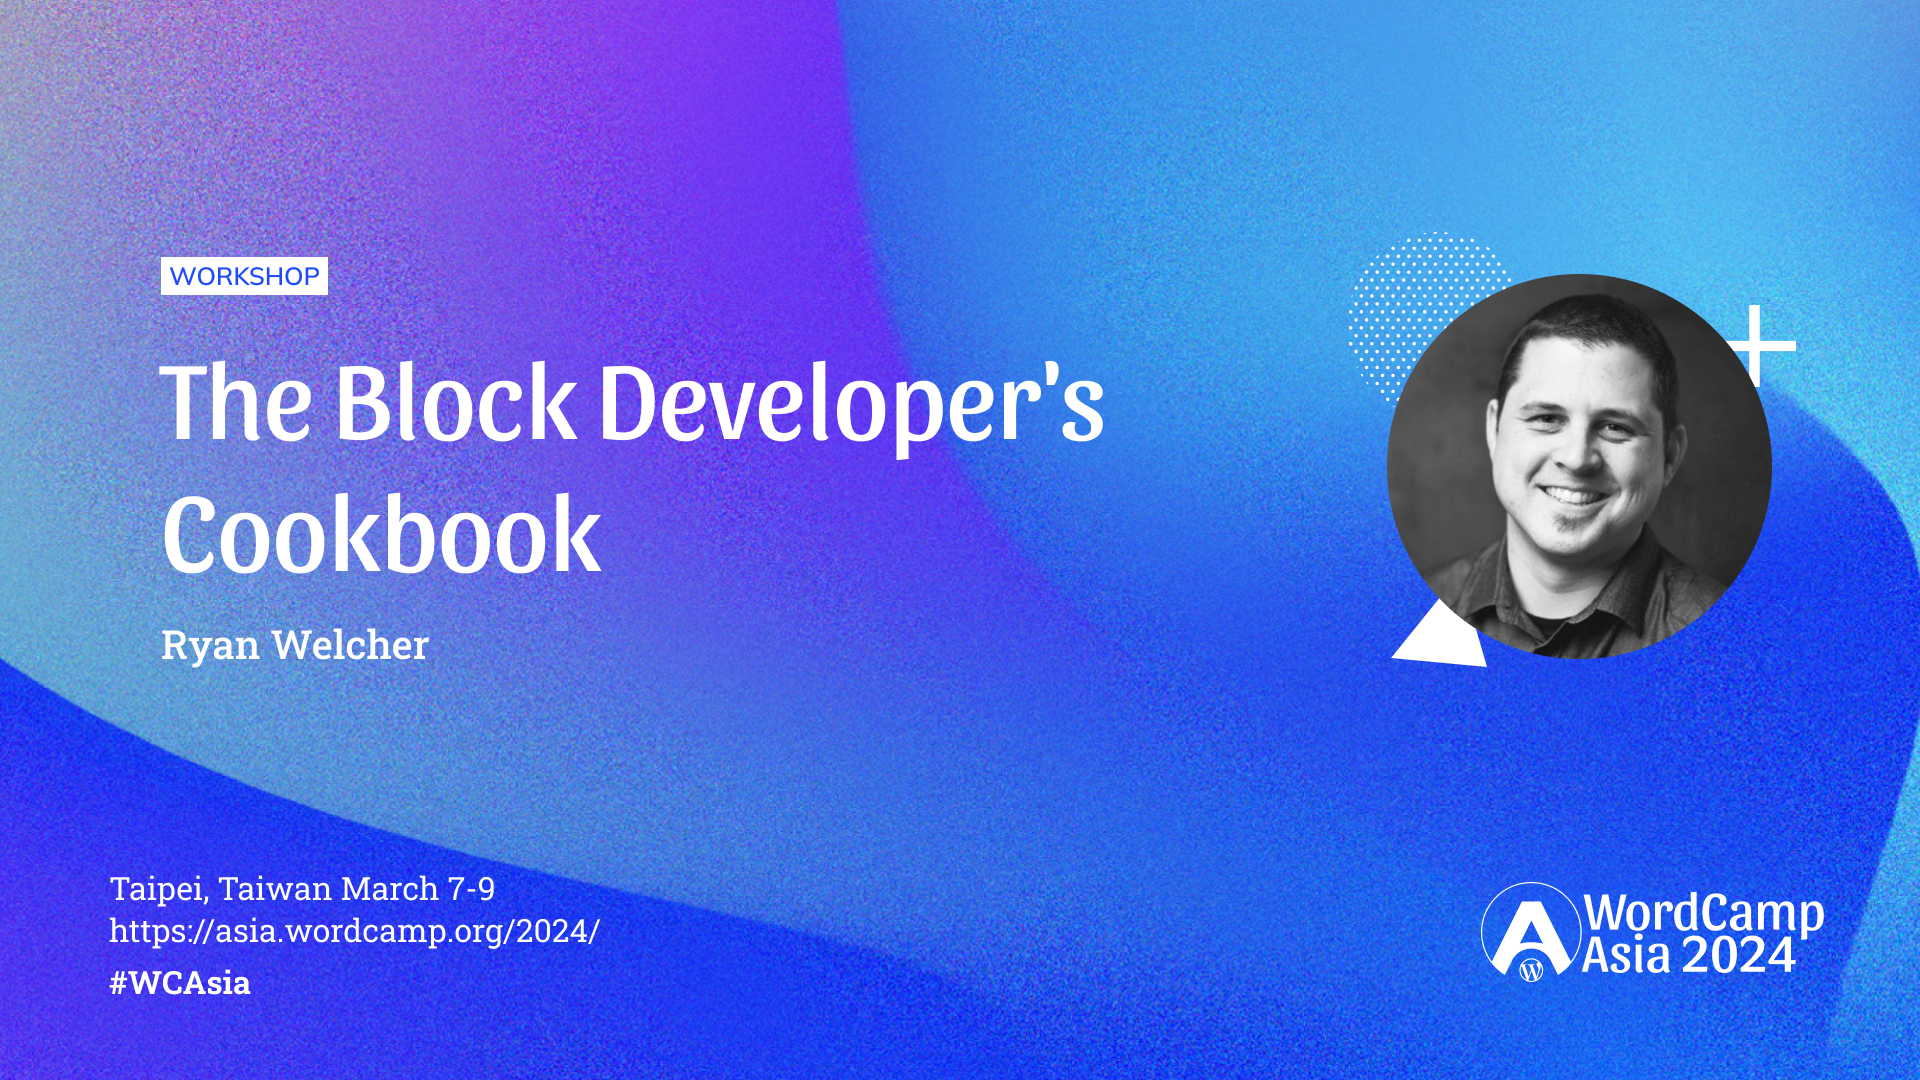 The Block Developer’s Cookbook